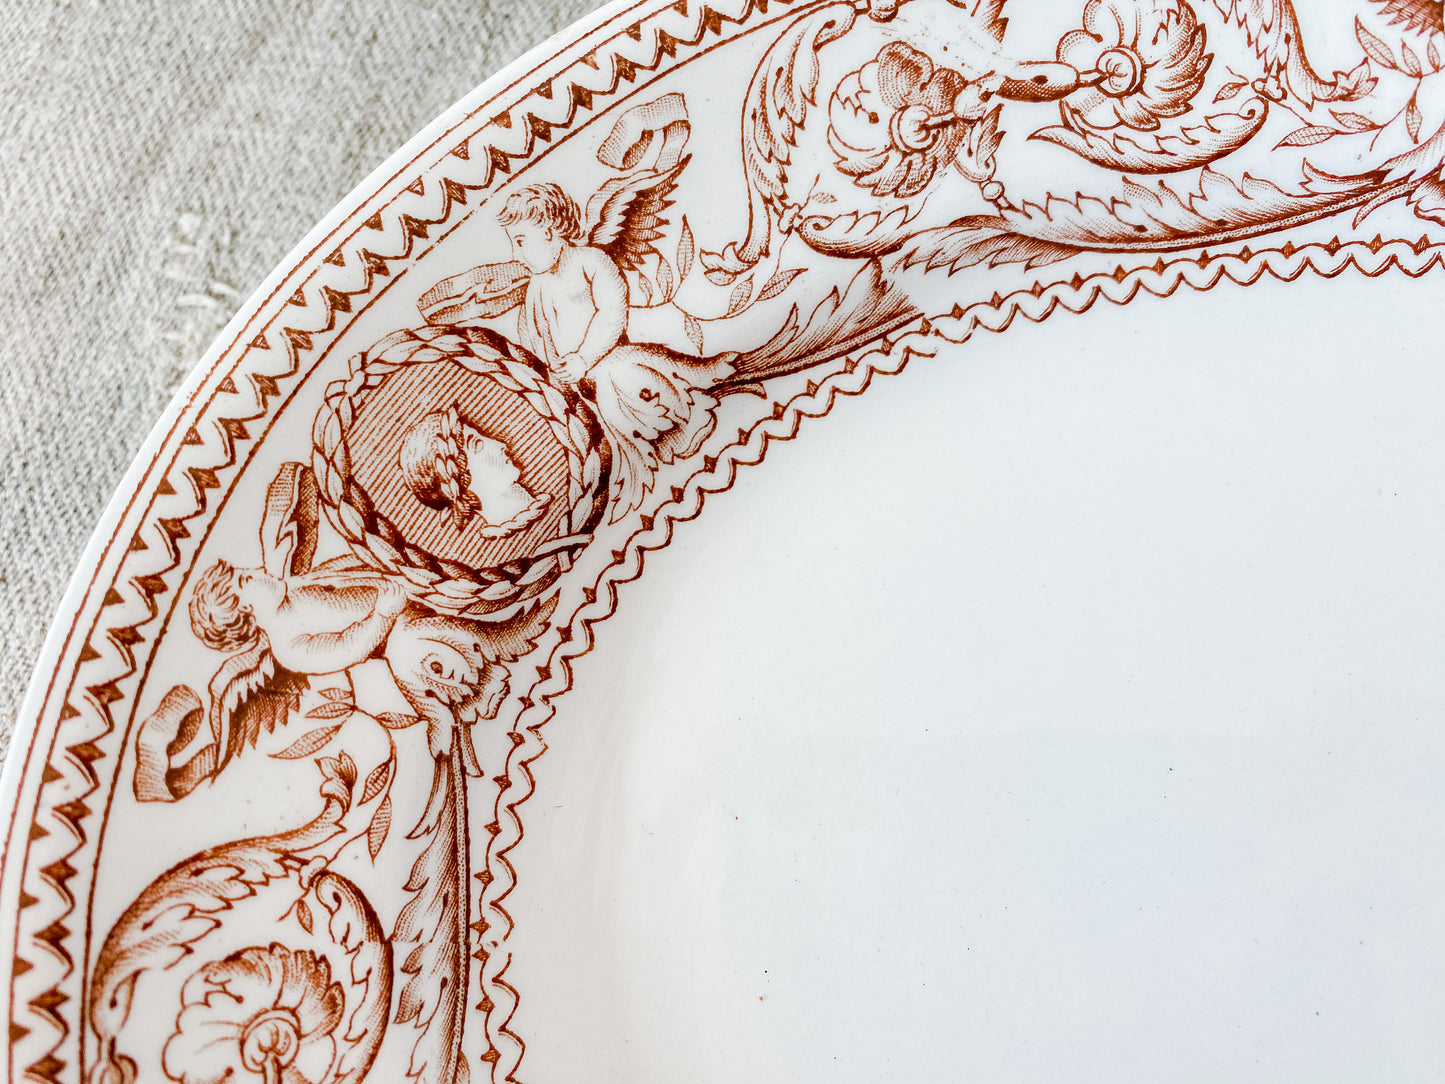 Antique Brown Transferware Ironstone Platter, Italian by Bodley & Sons, c1880s Rare Italianate Pattern